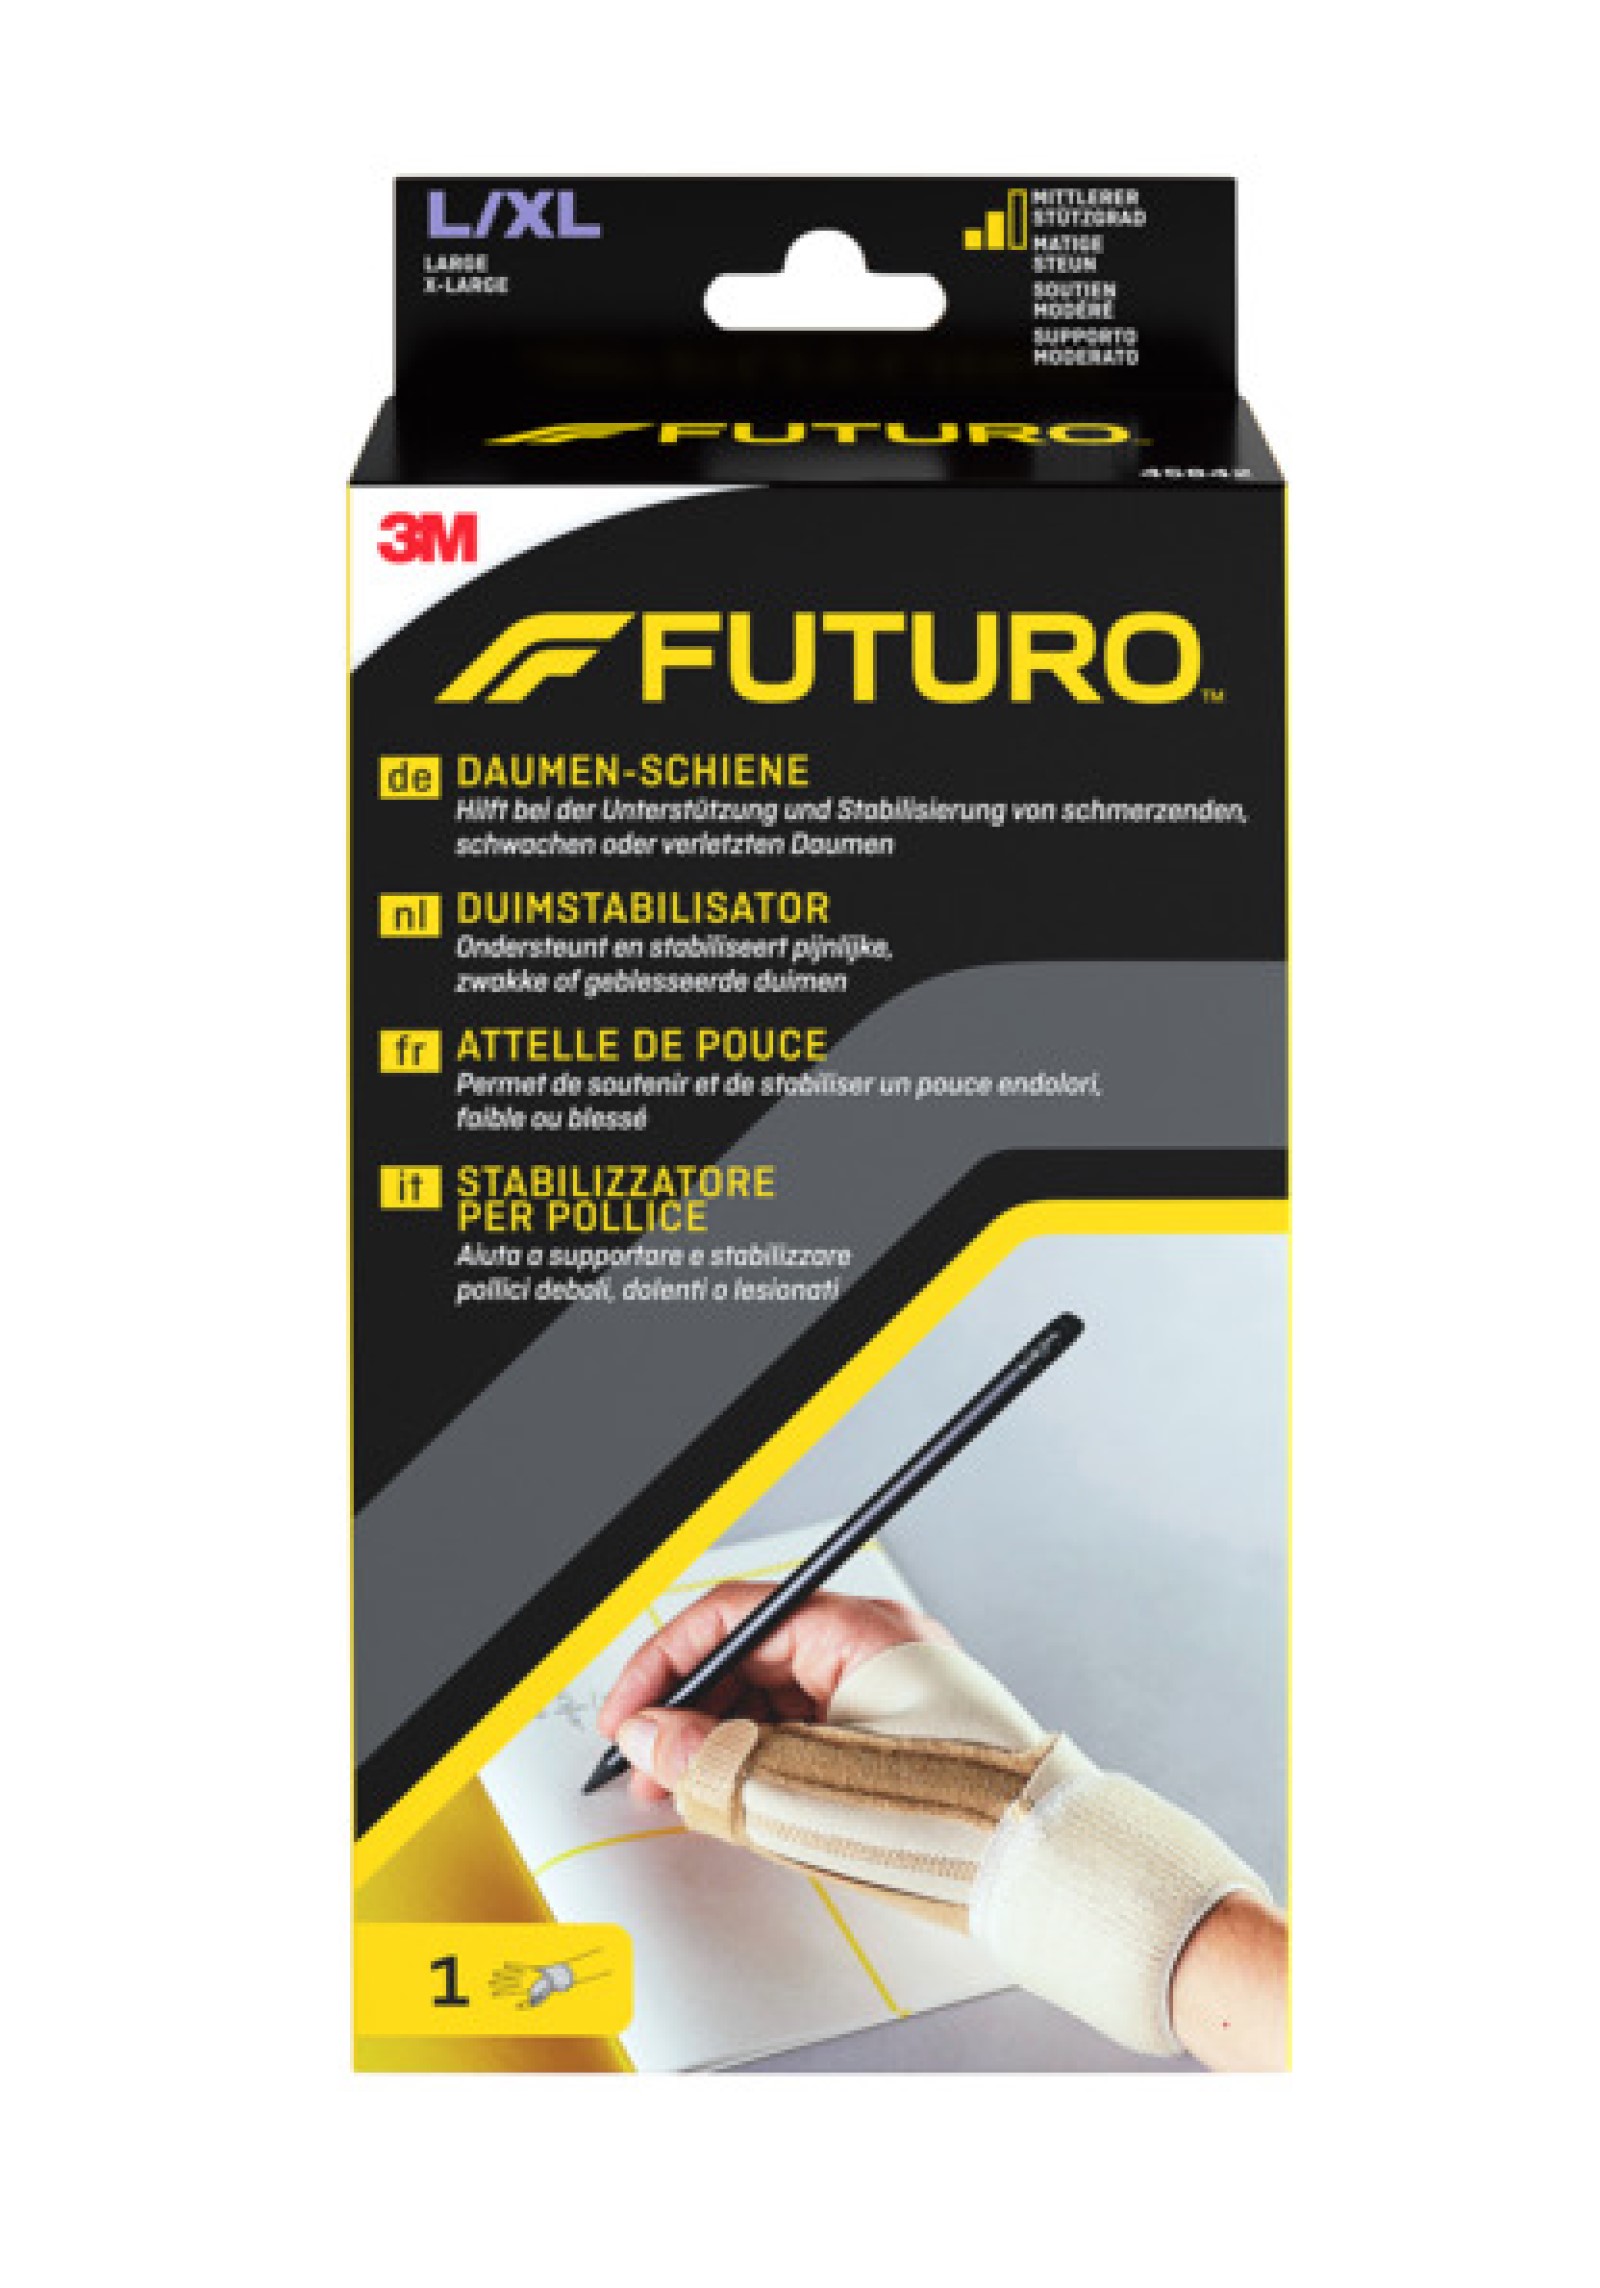 FUTURO™ Daumen-Schiene 45842, L/XL (17.8 - 22.9 cm)